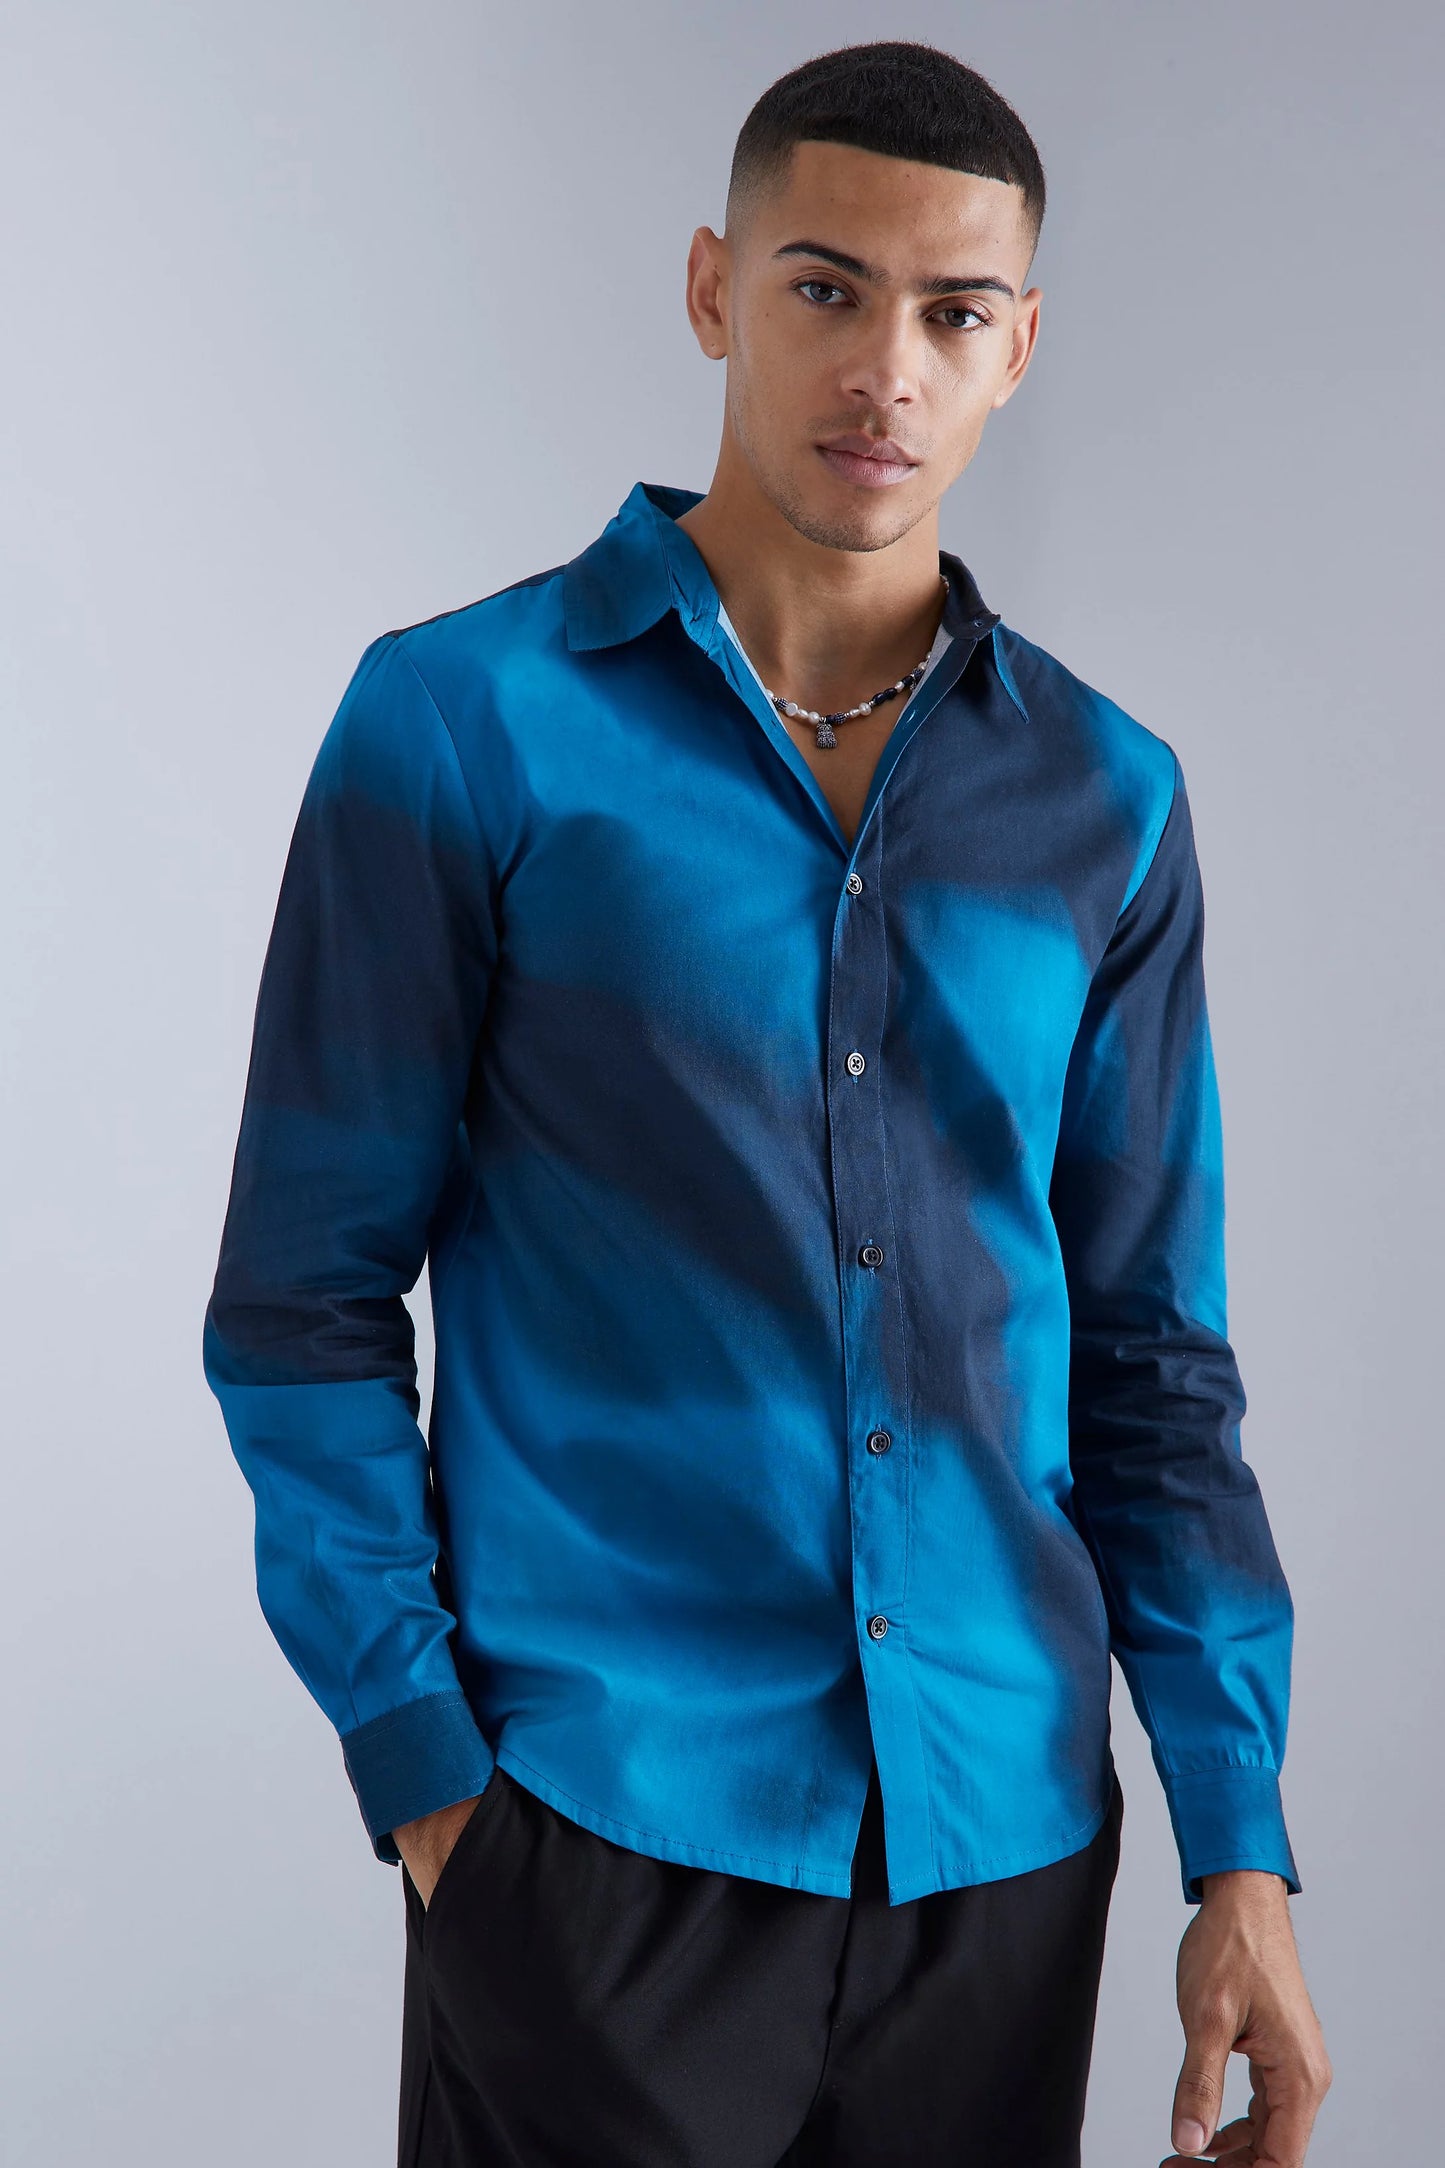 Blue Long Sleeve Printed Shirt